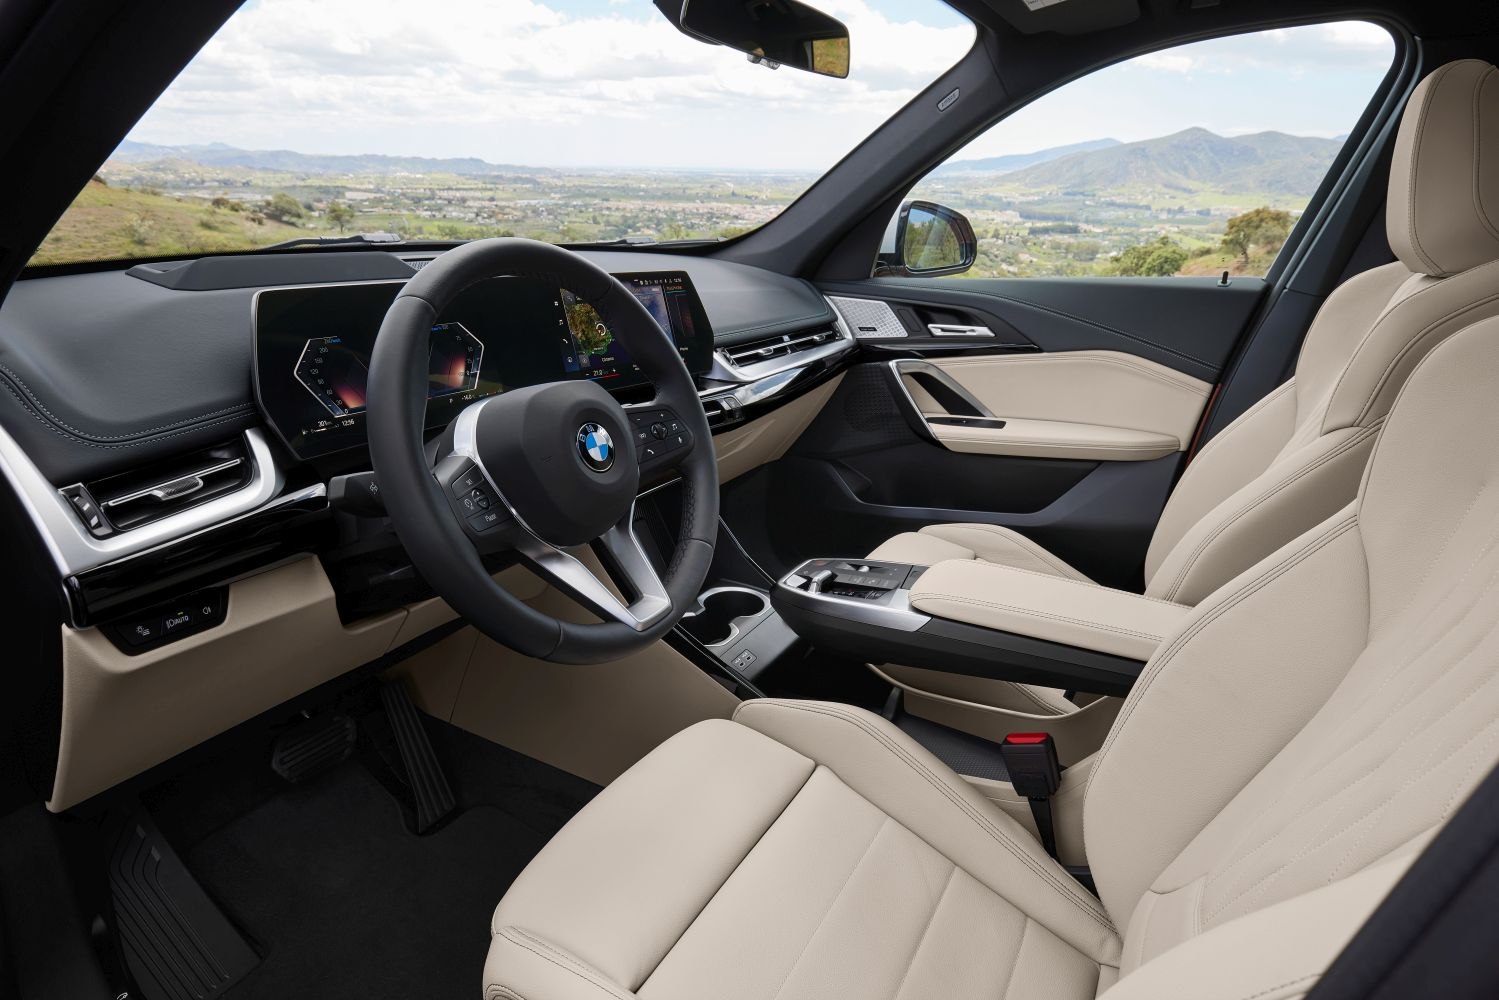 File:BMW X1 U11 Interior1.jpg - Wikipedia